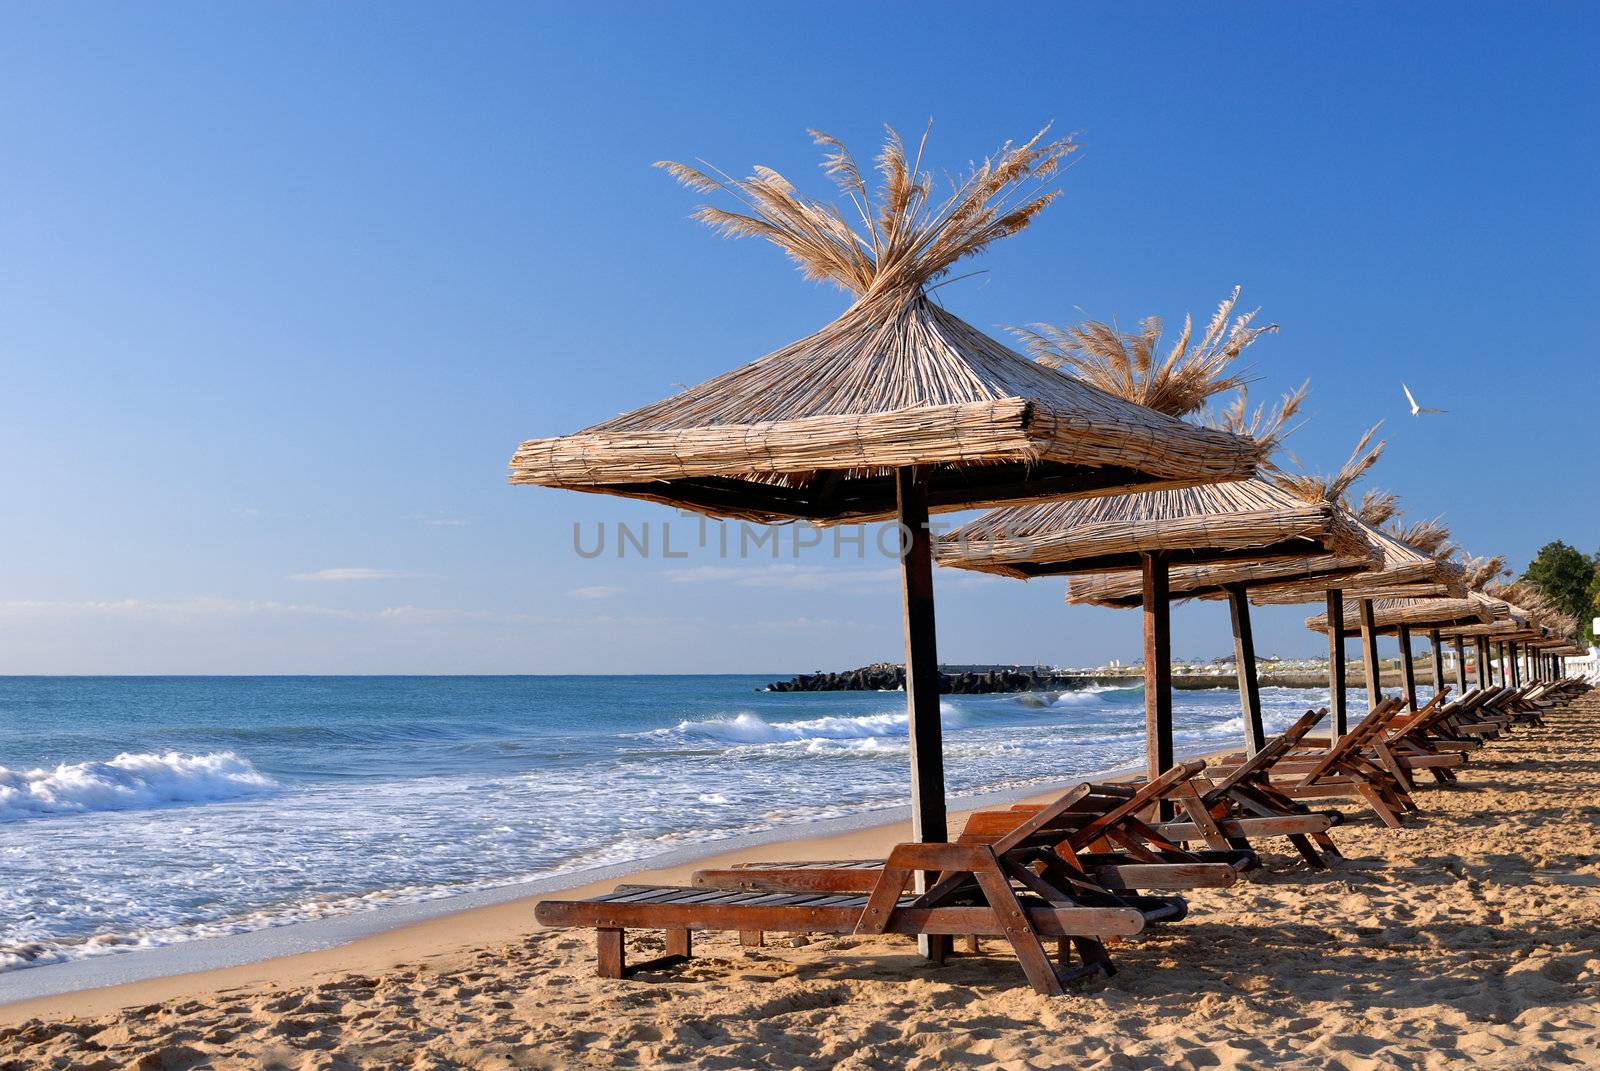 empty sunchairs and umbrellas on the sunny beach